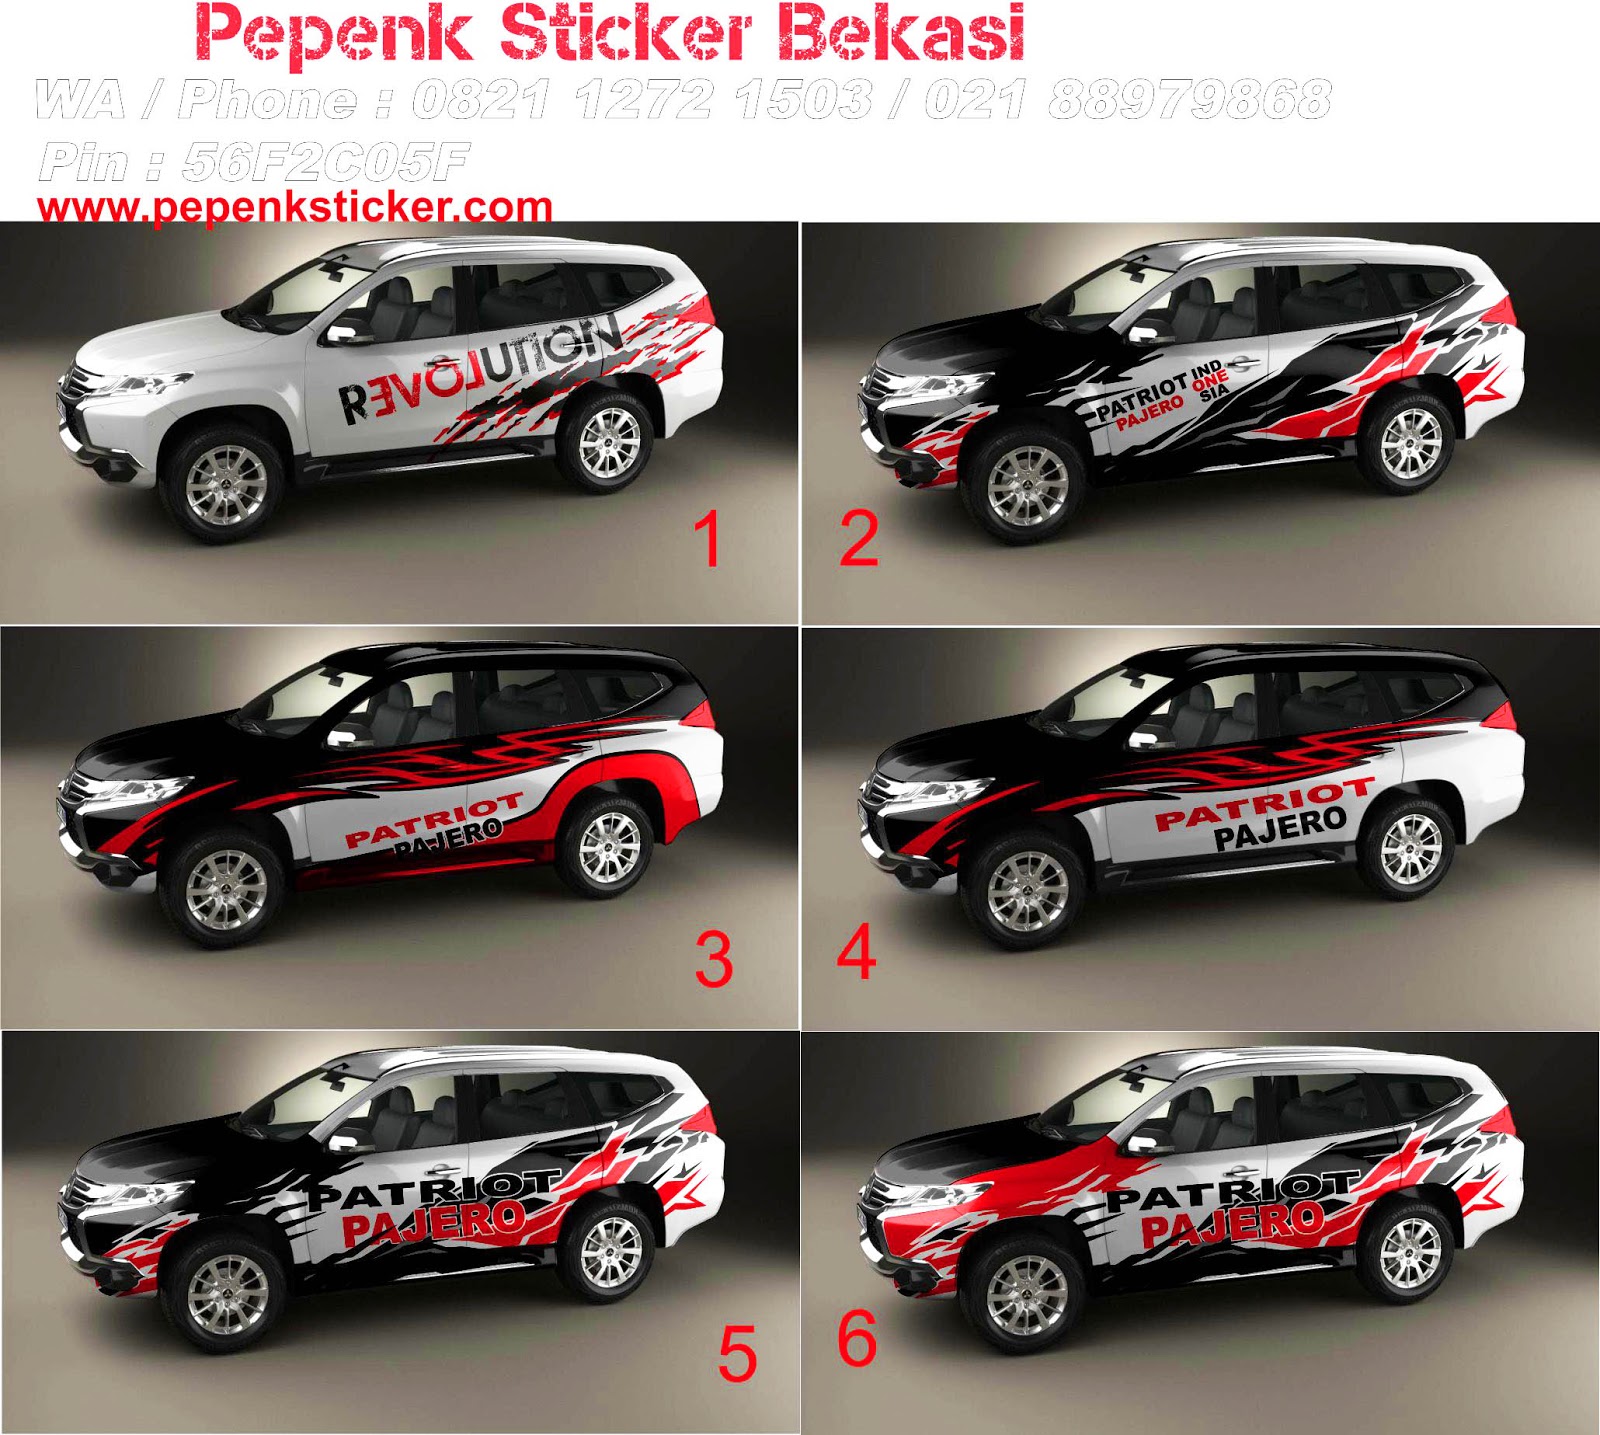 Gambar Cutting Sticker Mobil Pajero Duniaotto